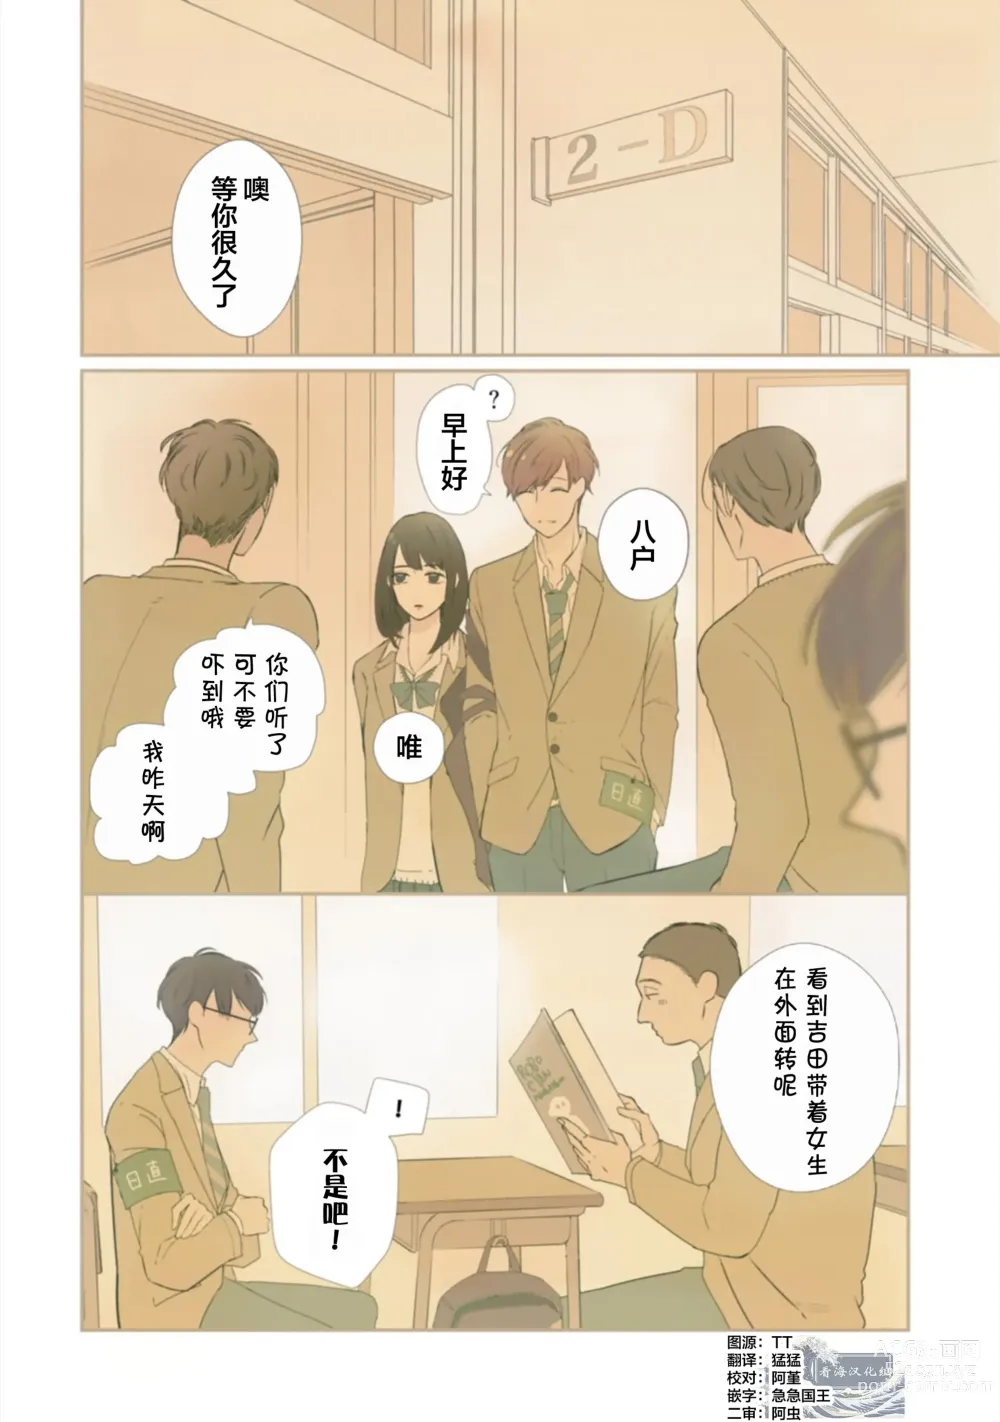 Page 6 of manga 渴望褪下制服